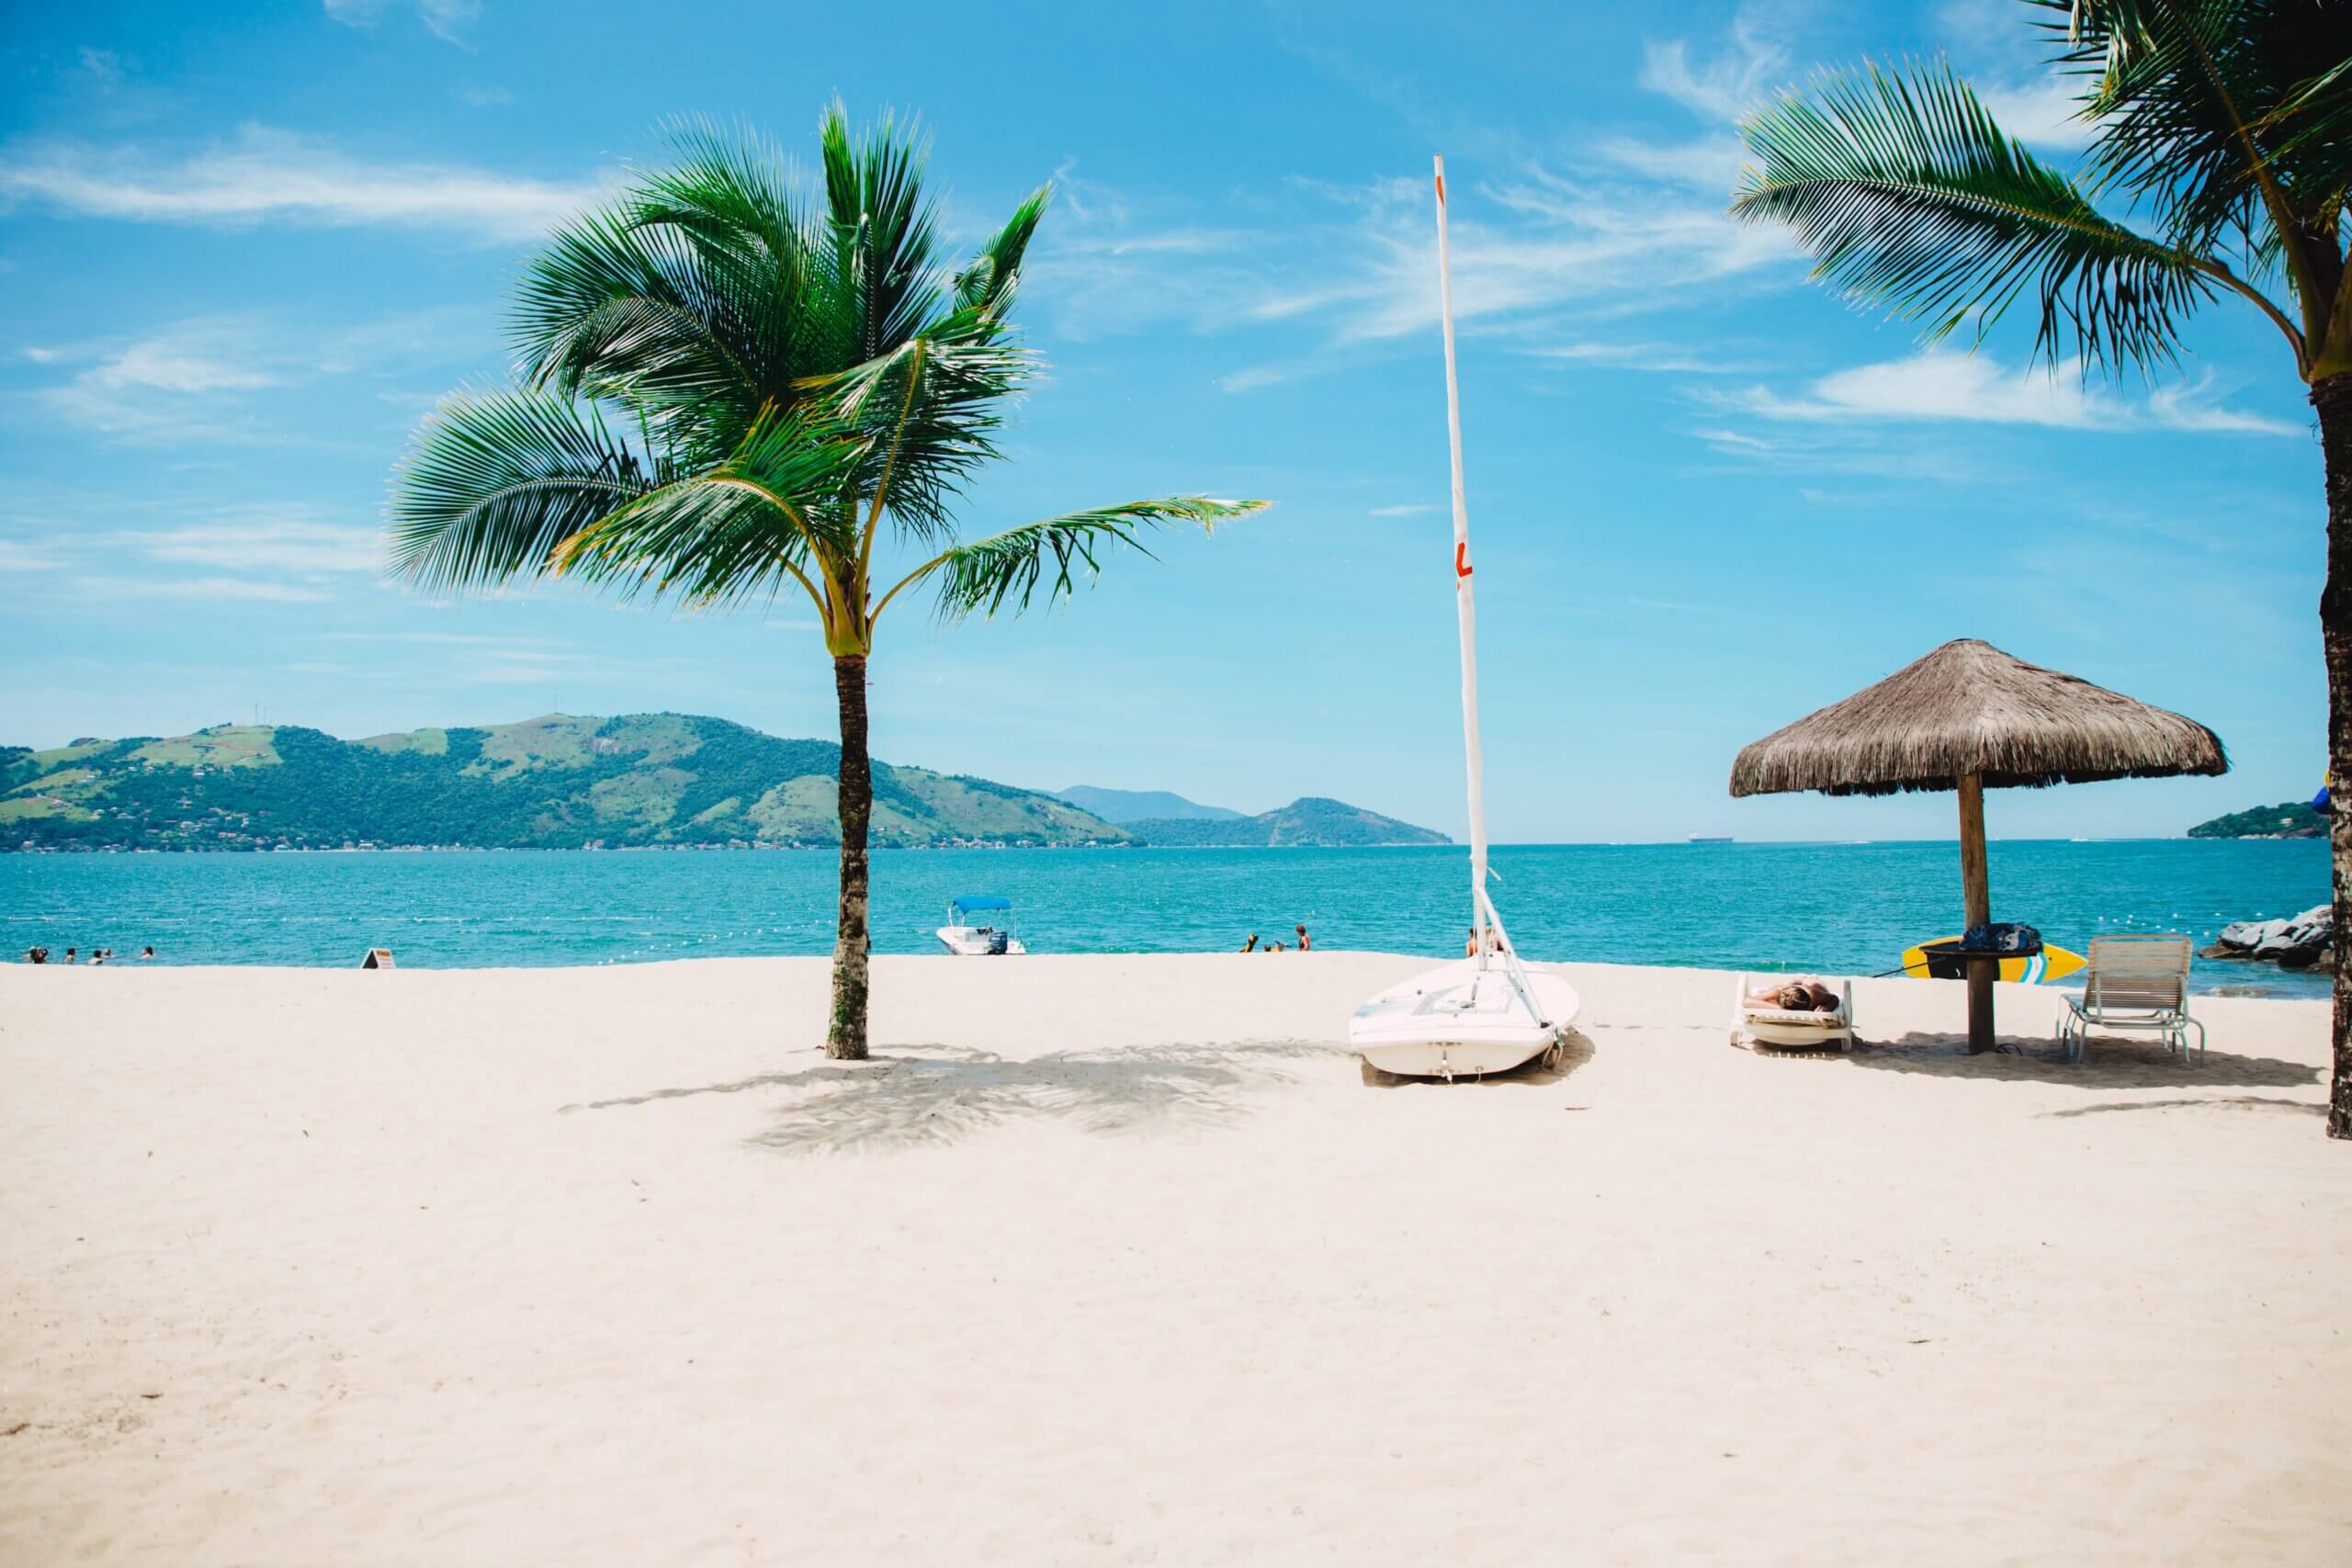 Beach scene with palm tree